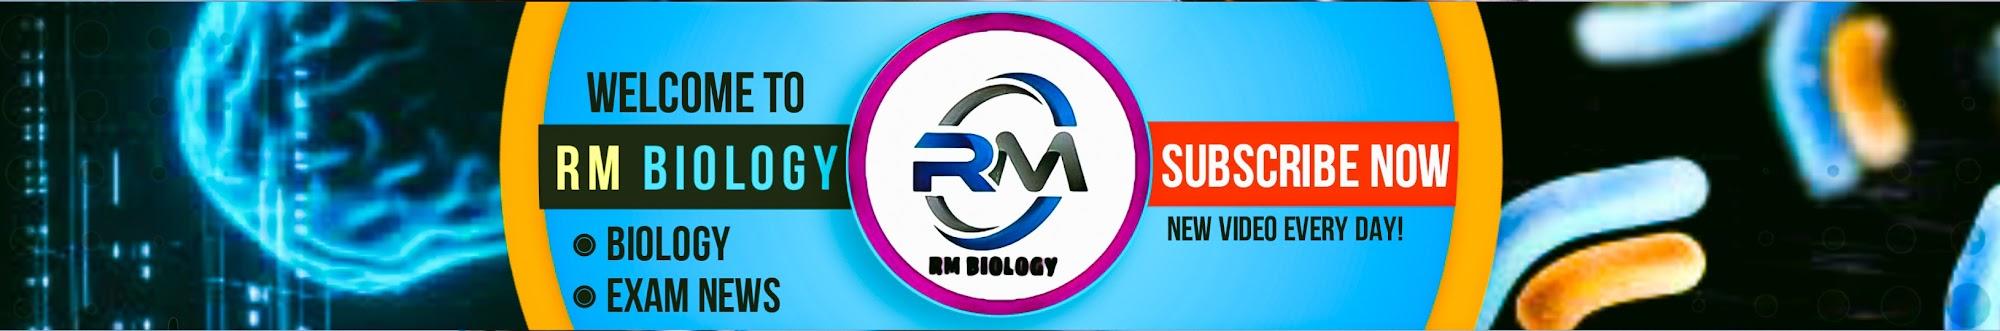 RM Biology